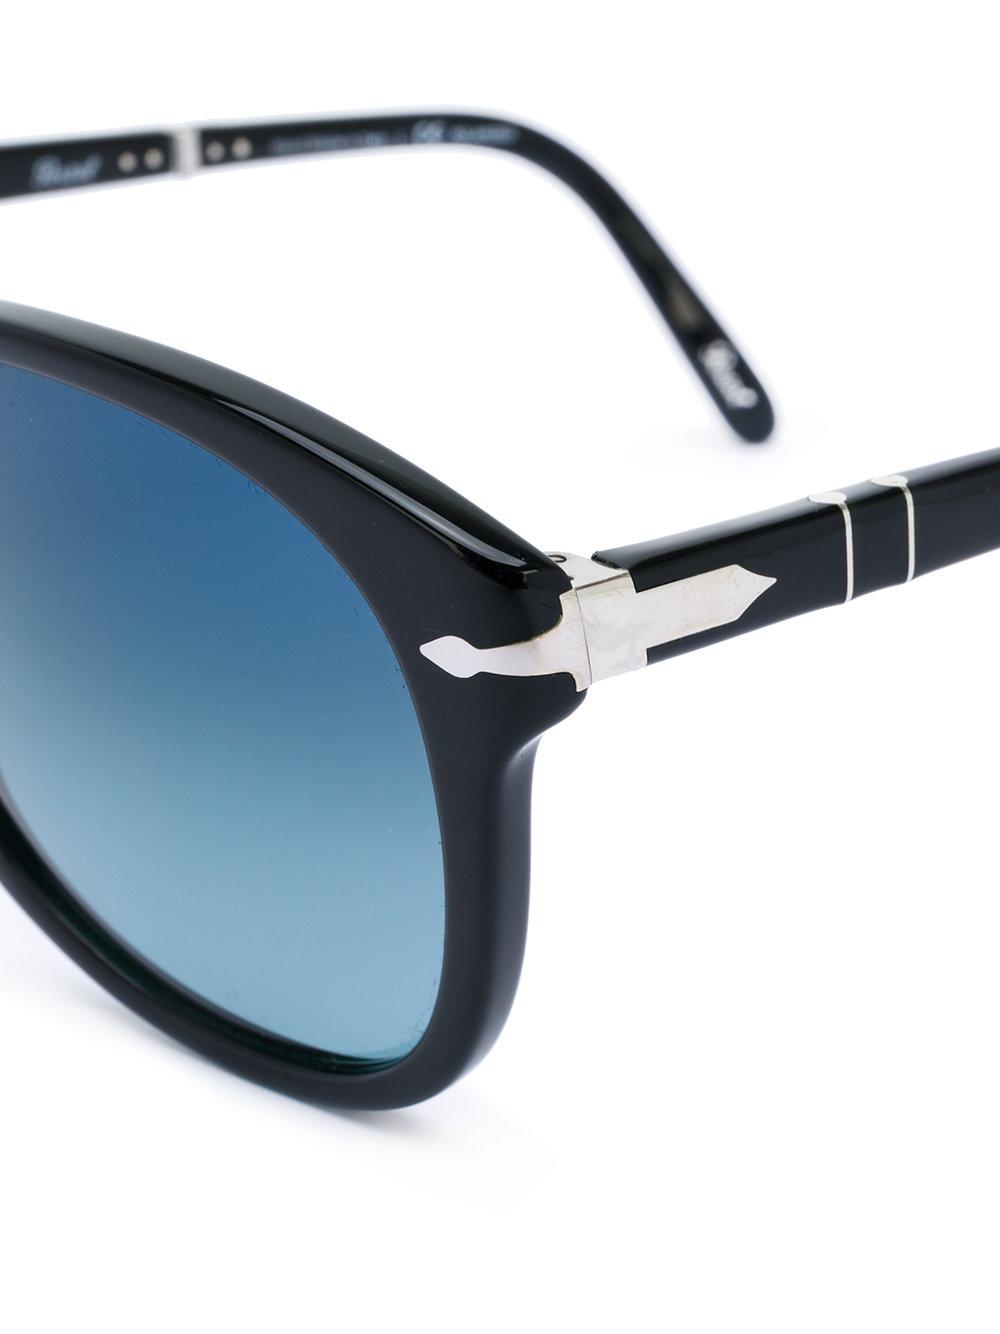 Persol Steve Mcqueen Sunglasses in Black - Lyst